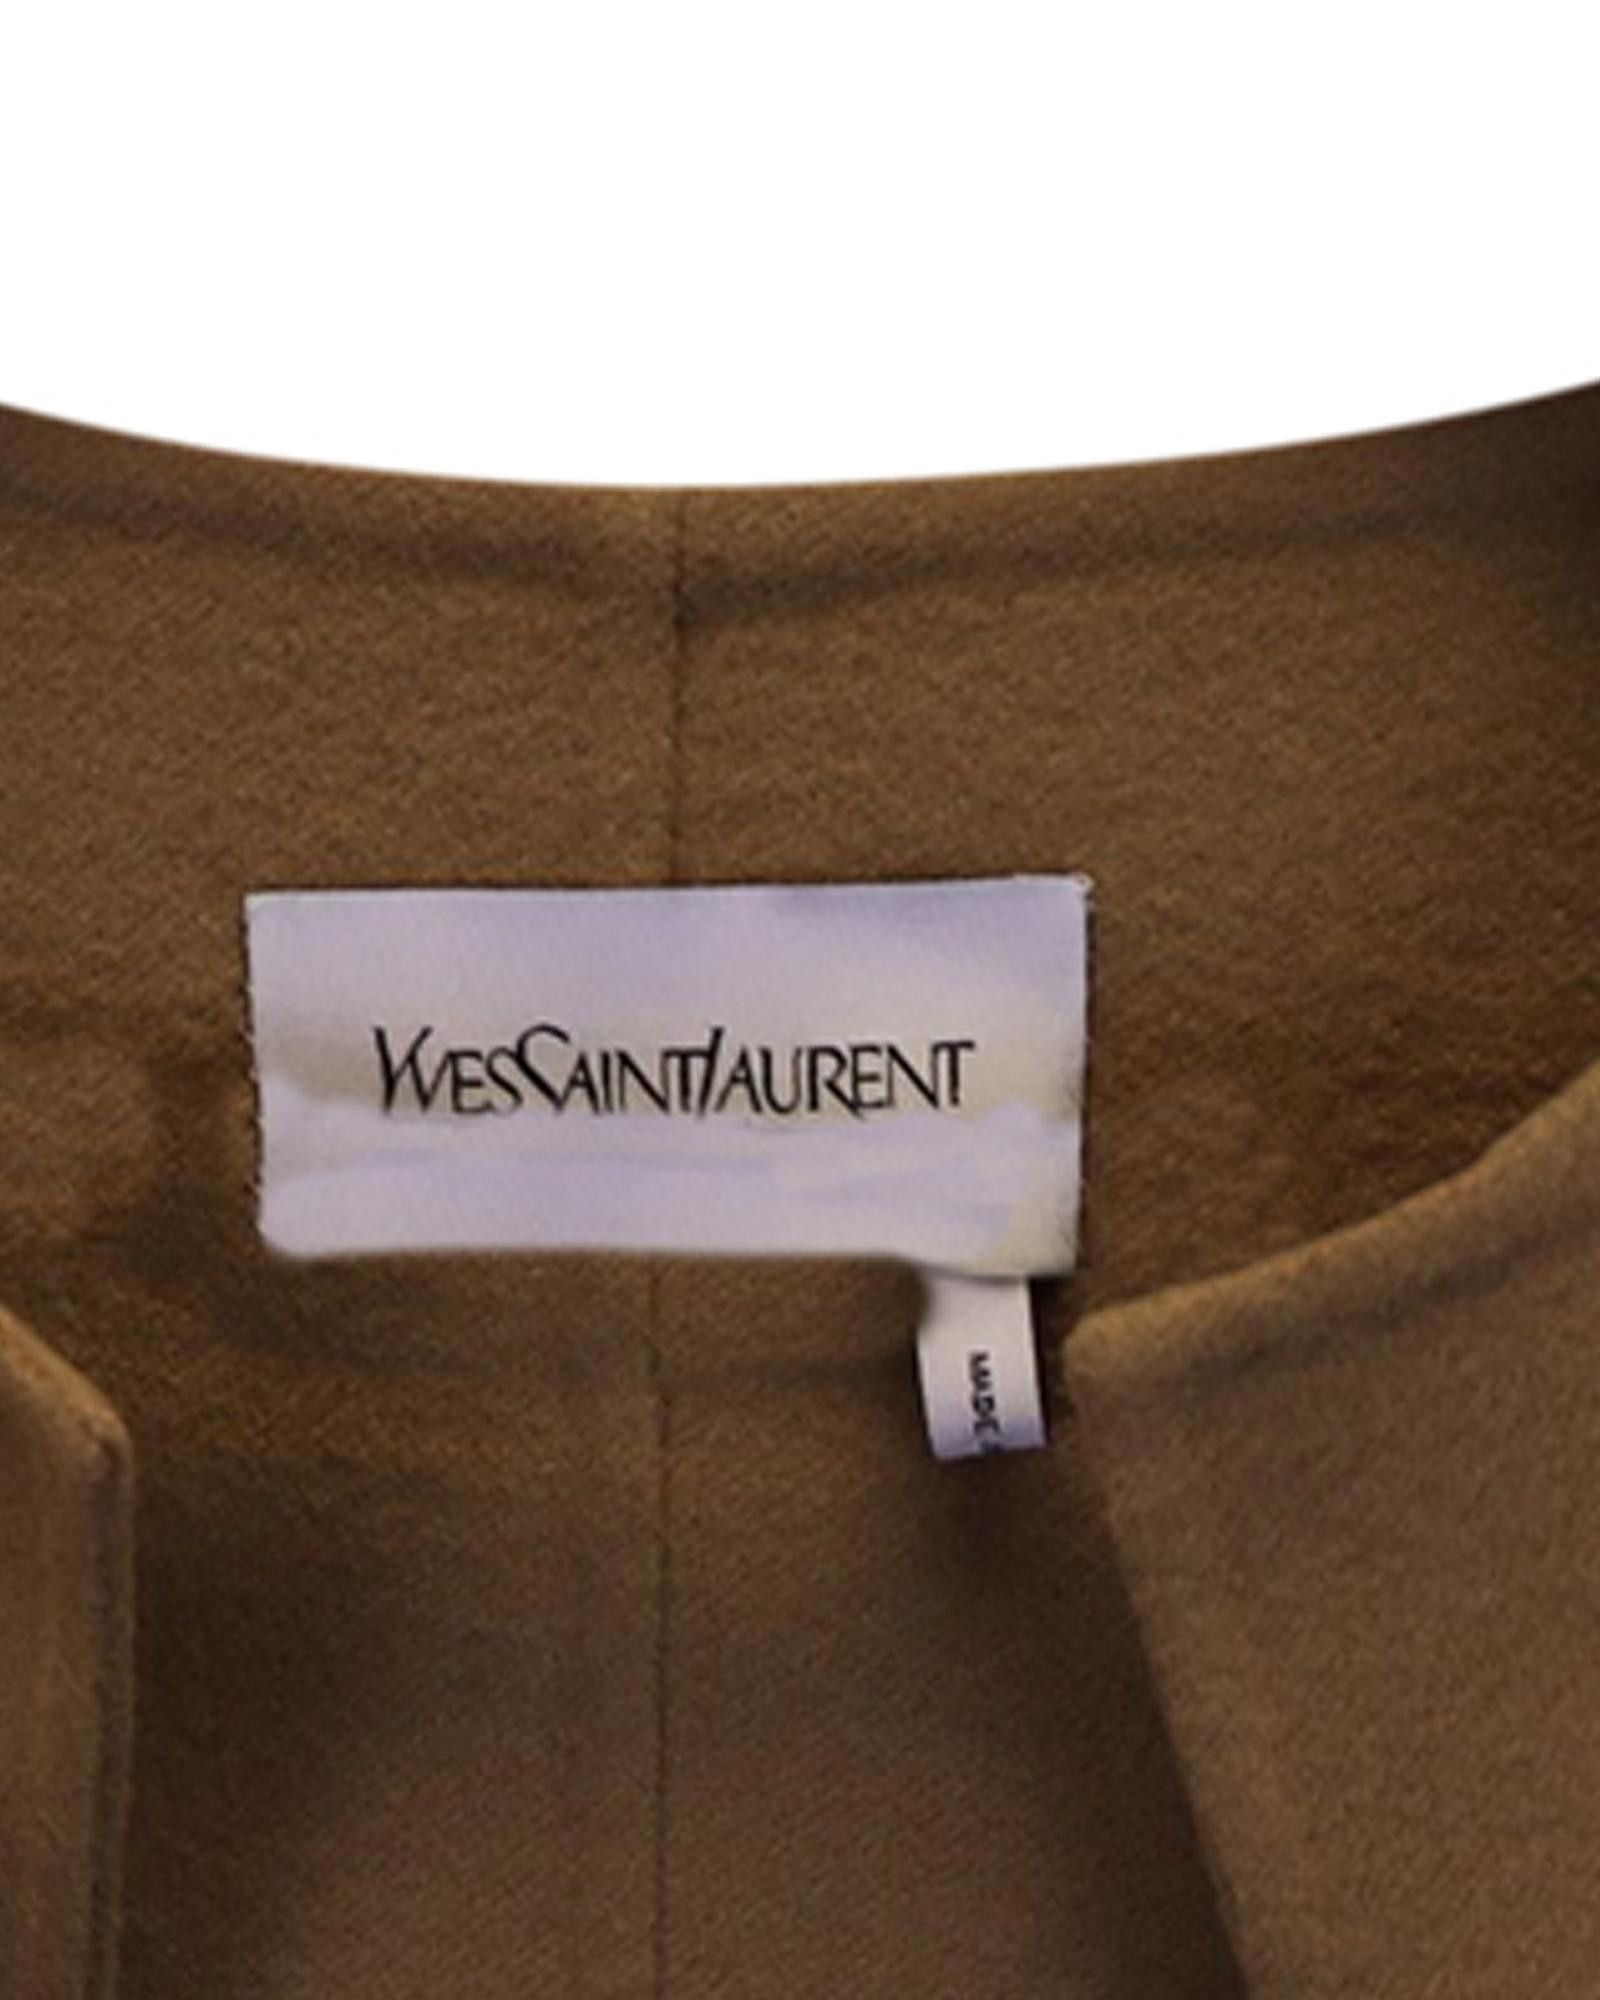 Yves Saint Laurent Luxurious Brown Cashmere Cropped Jacket by Saint Laurent Size S / US 4 / IT 40 - 3 Preview